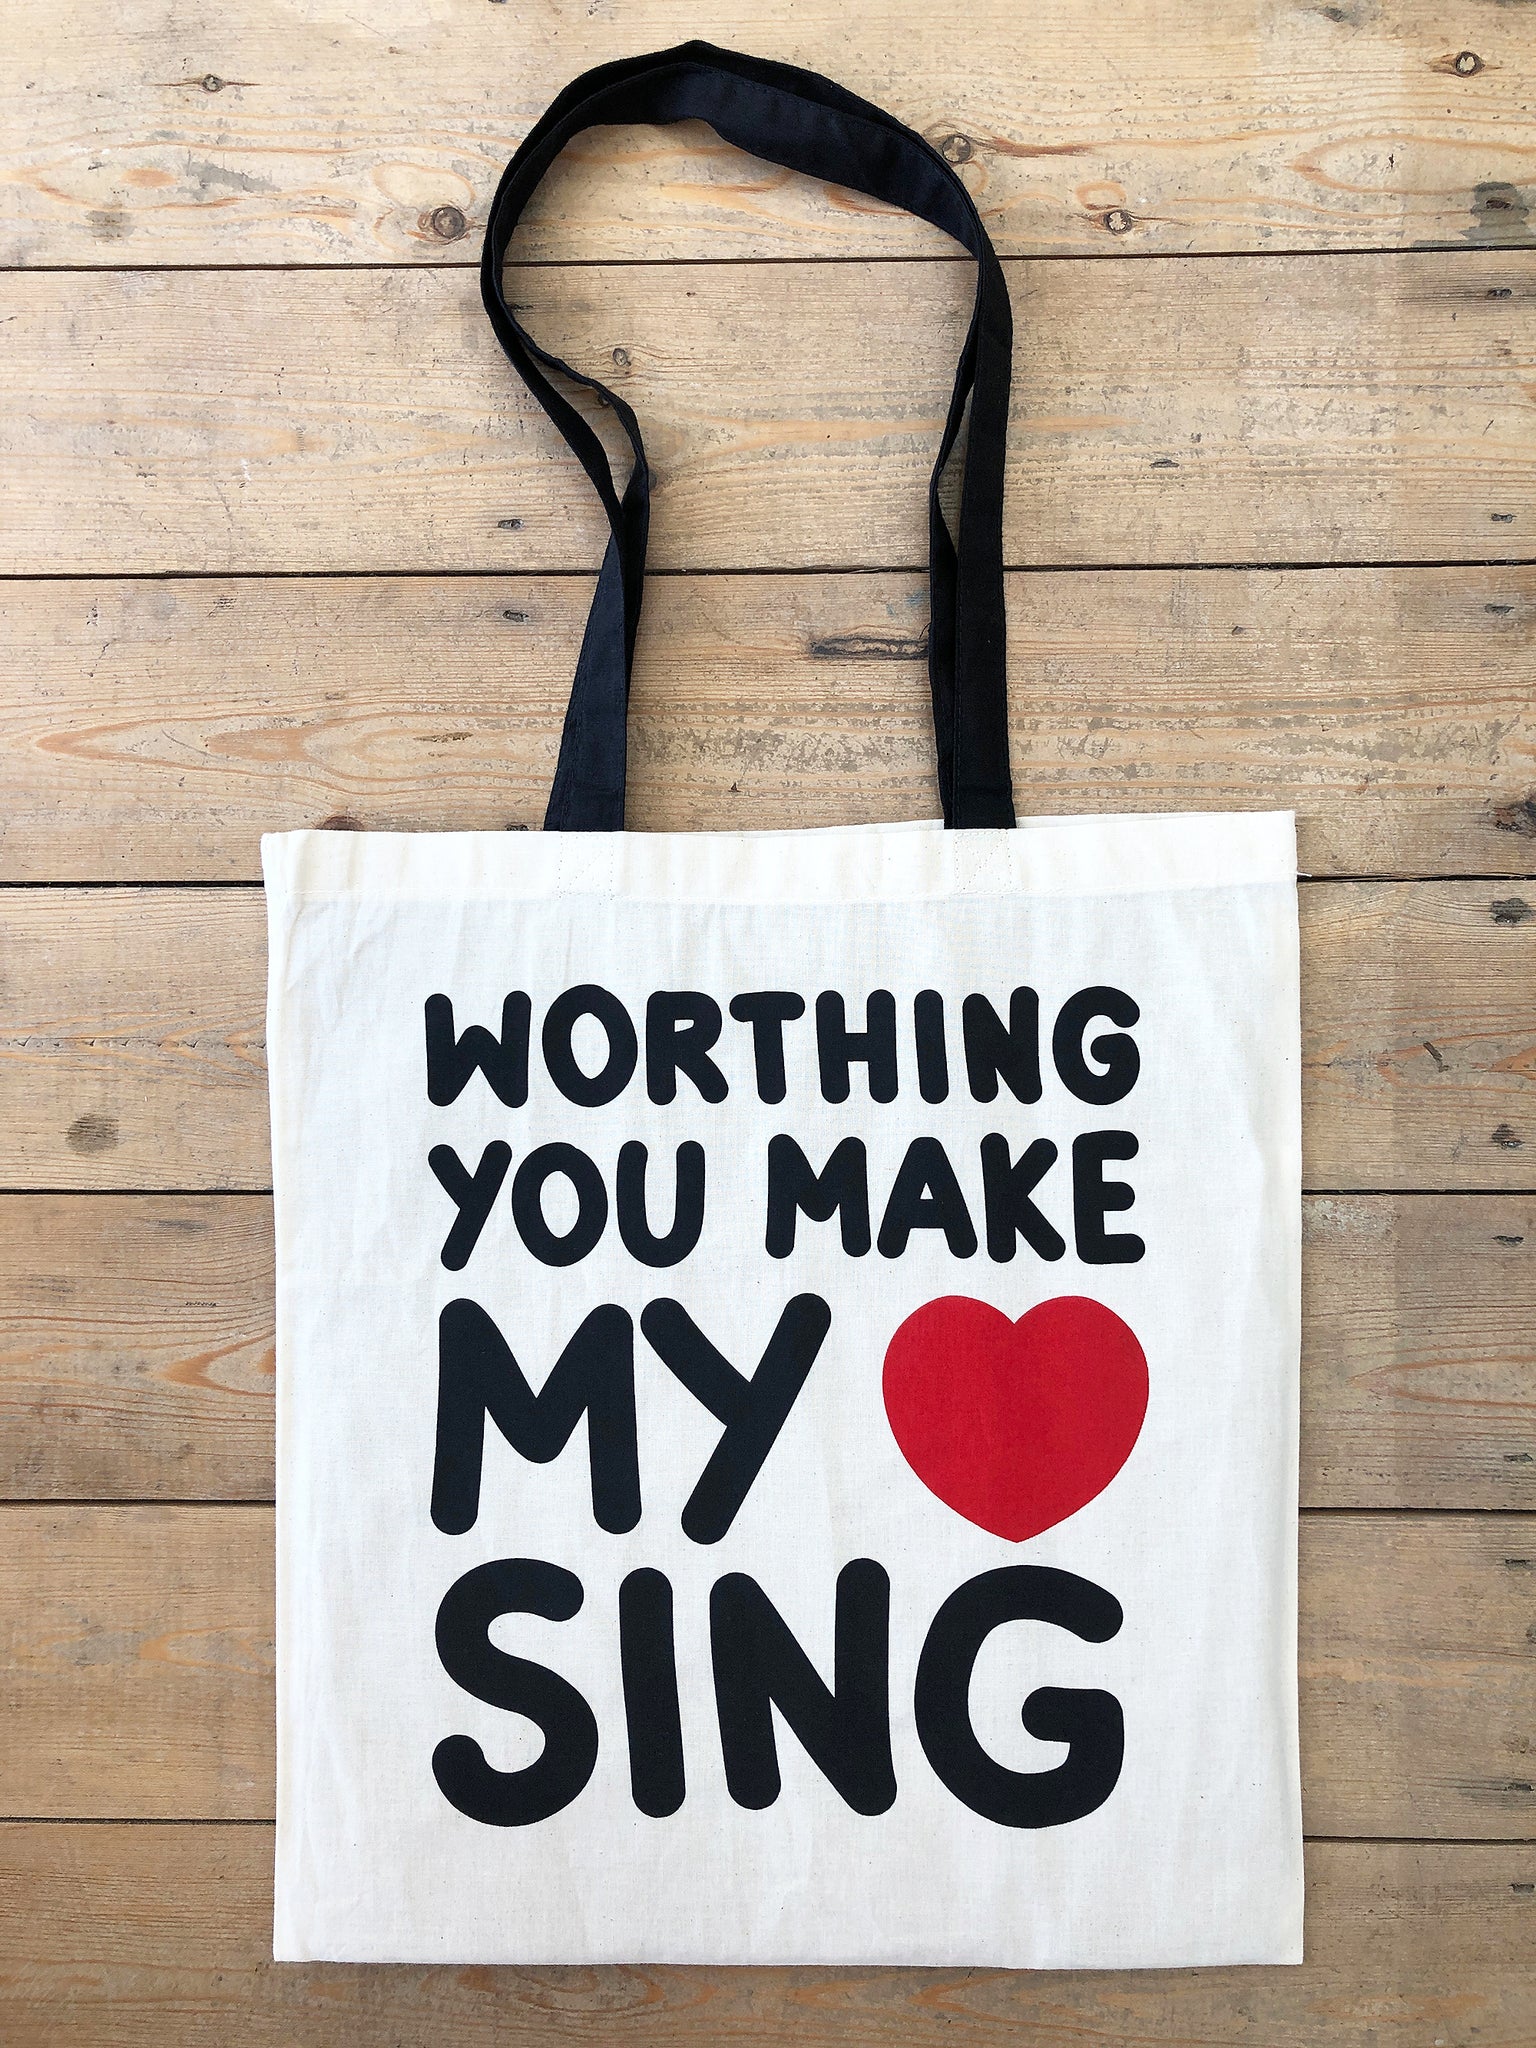 Worthing You make My Heart Sing tote bag